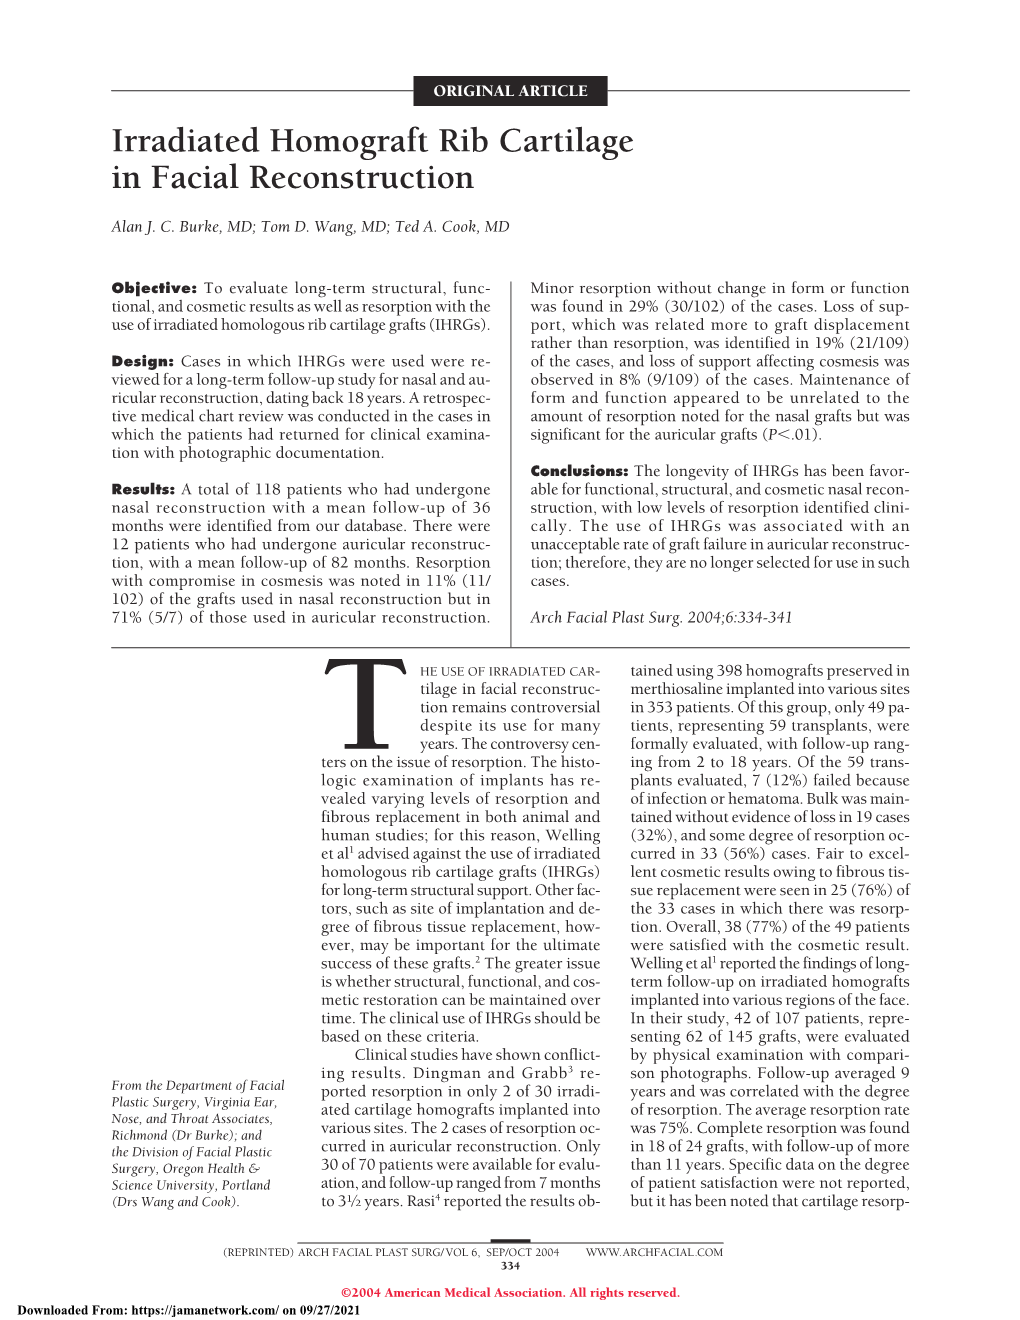 Irradiated Homograft Rib Cartilage in Facial Reconstruction